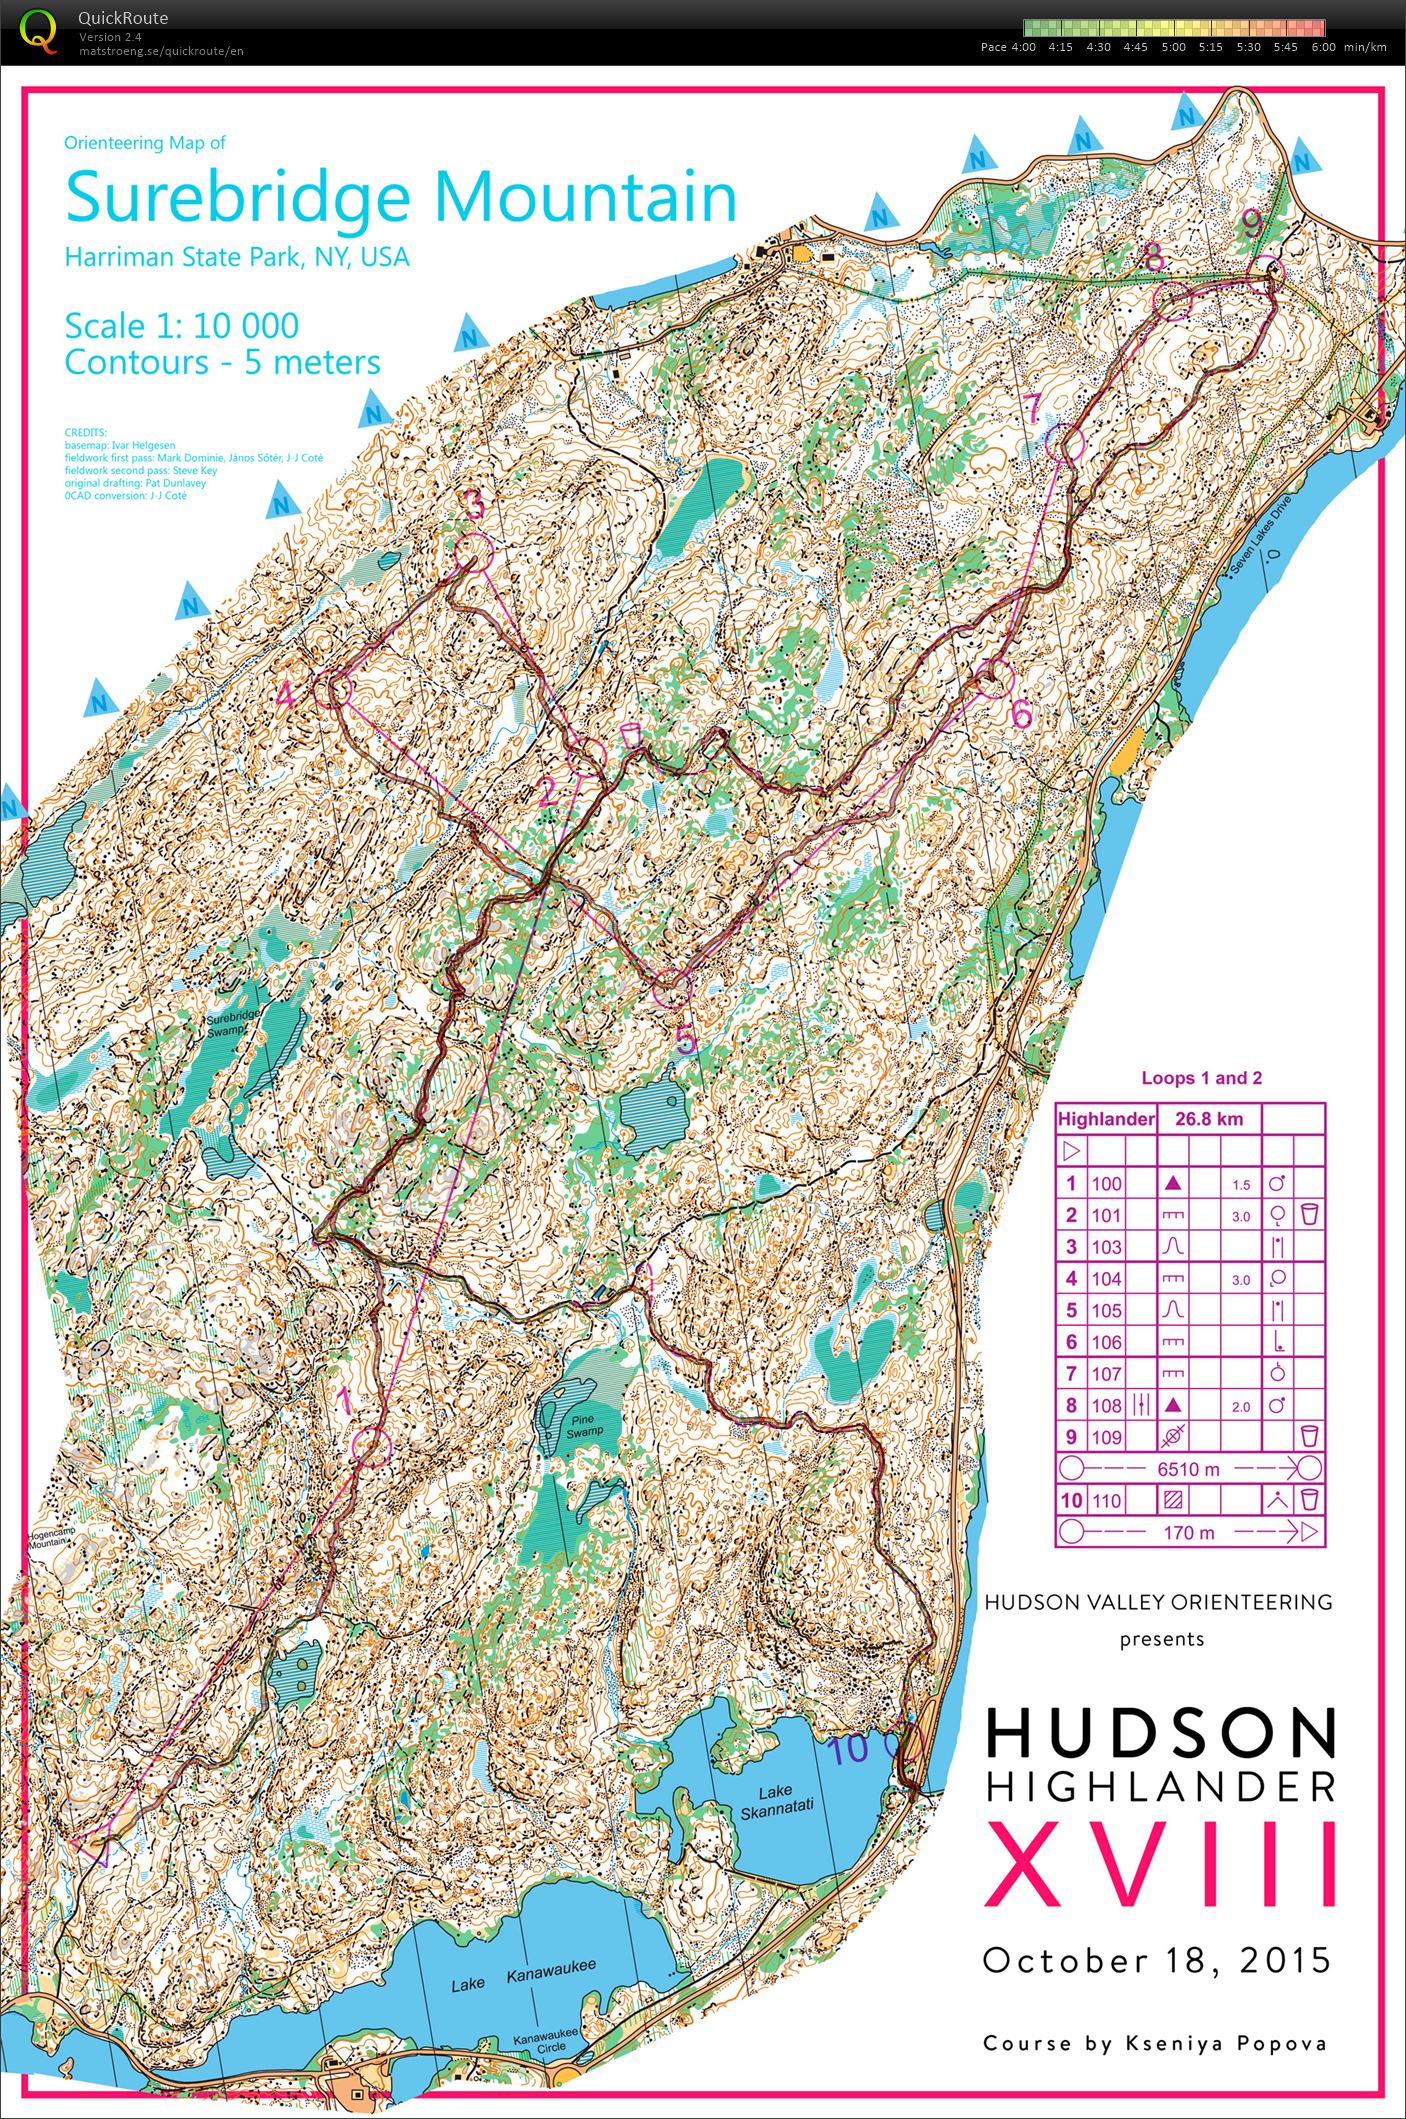 Hudson Highlander Loop 1 and Trail run (18.10.2015)